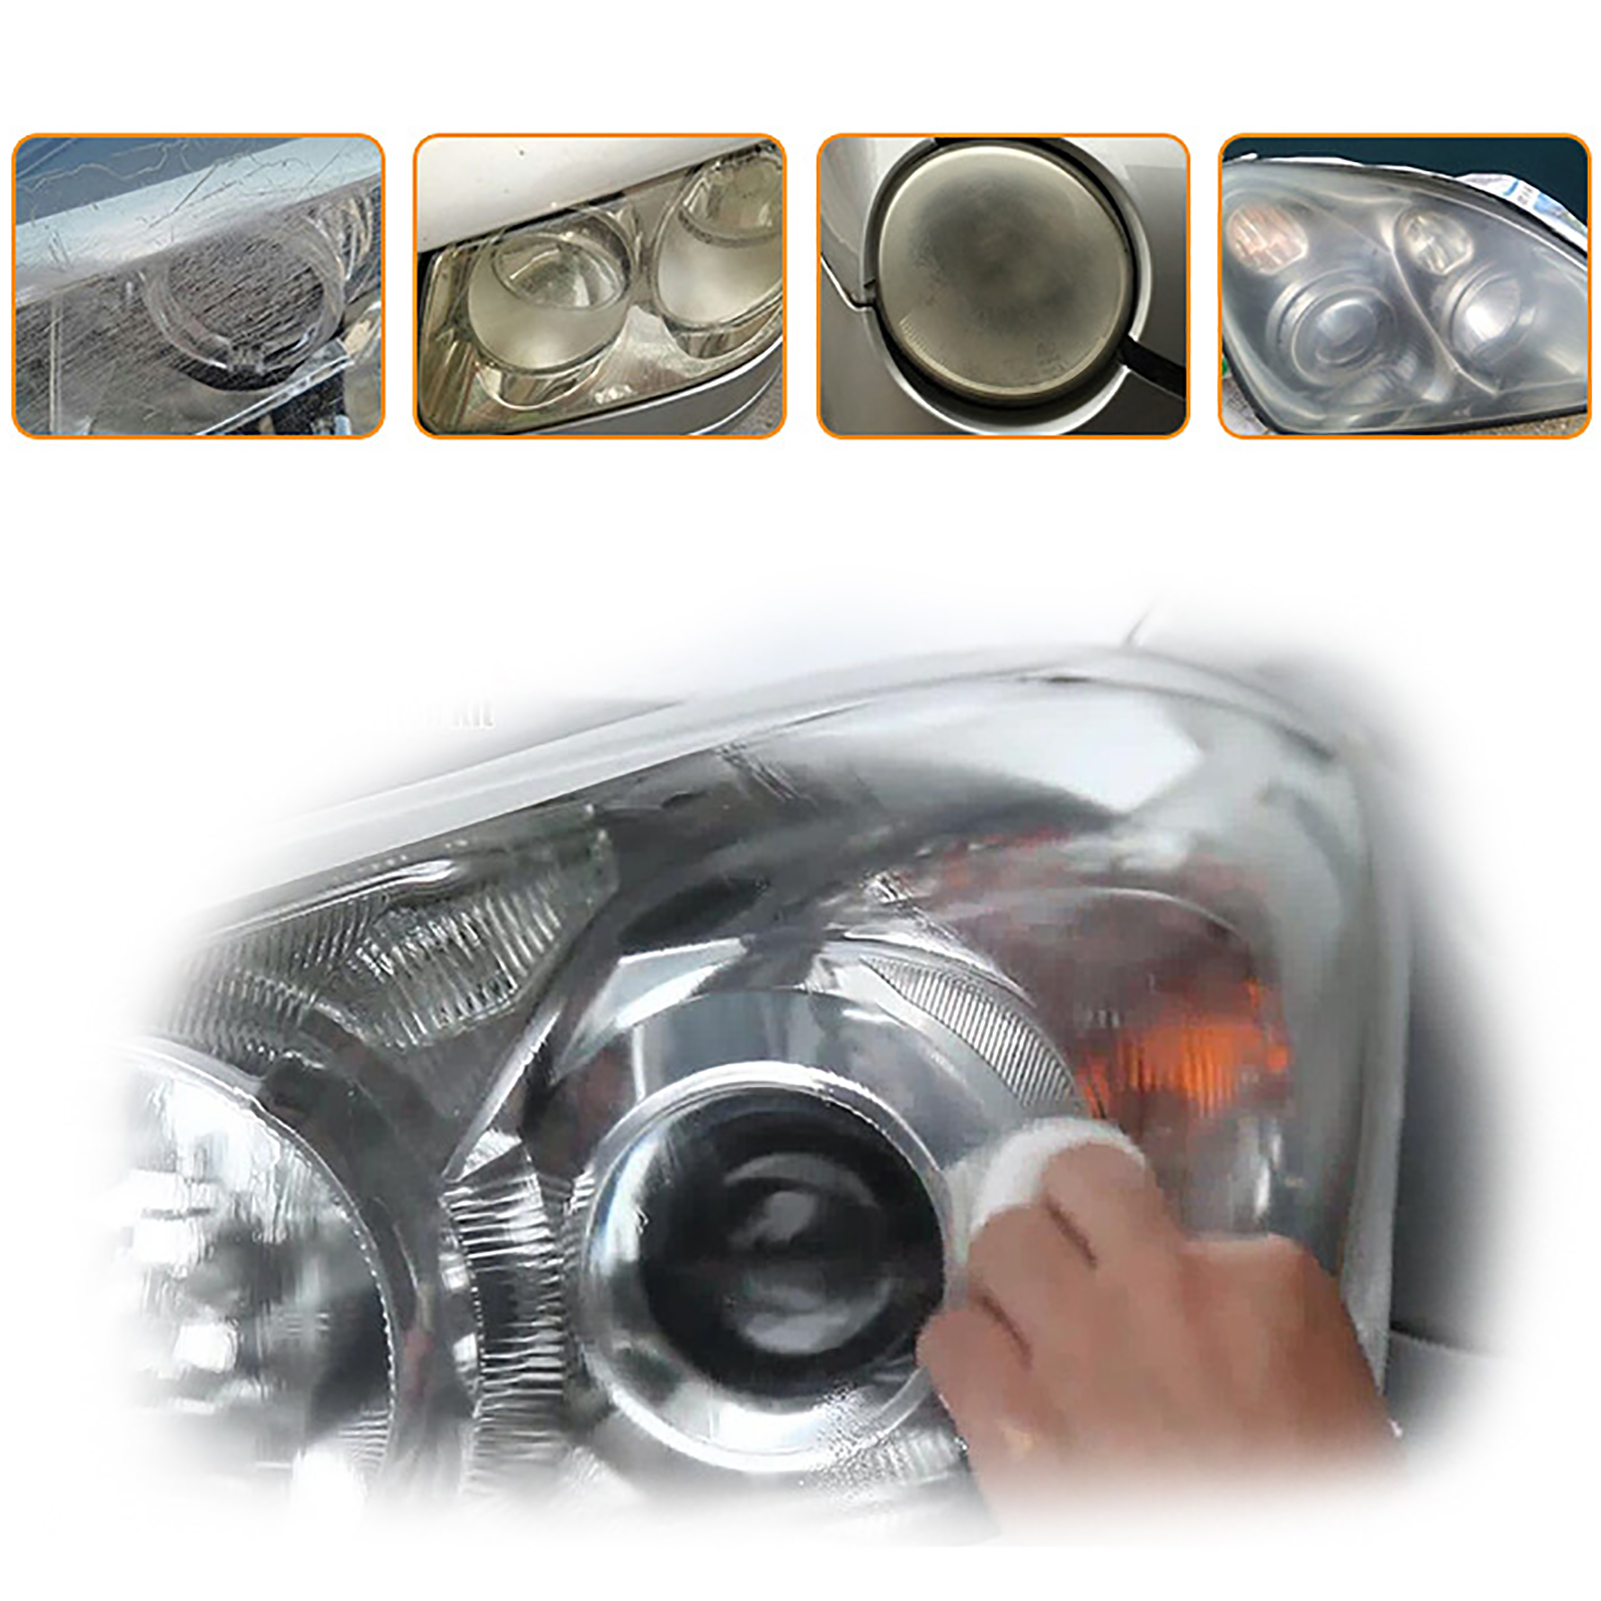  AUTOXBERT Kit de restauración de faros de coche, abrillantador,  reparación de arañazos, pasta líquida, pulidora de lentes de luz,  herramienta de reparación de pasta de limpieza : Automotriz